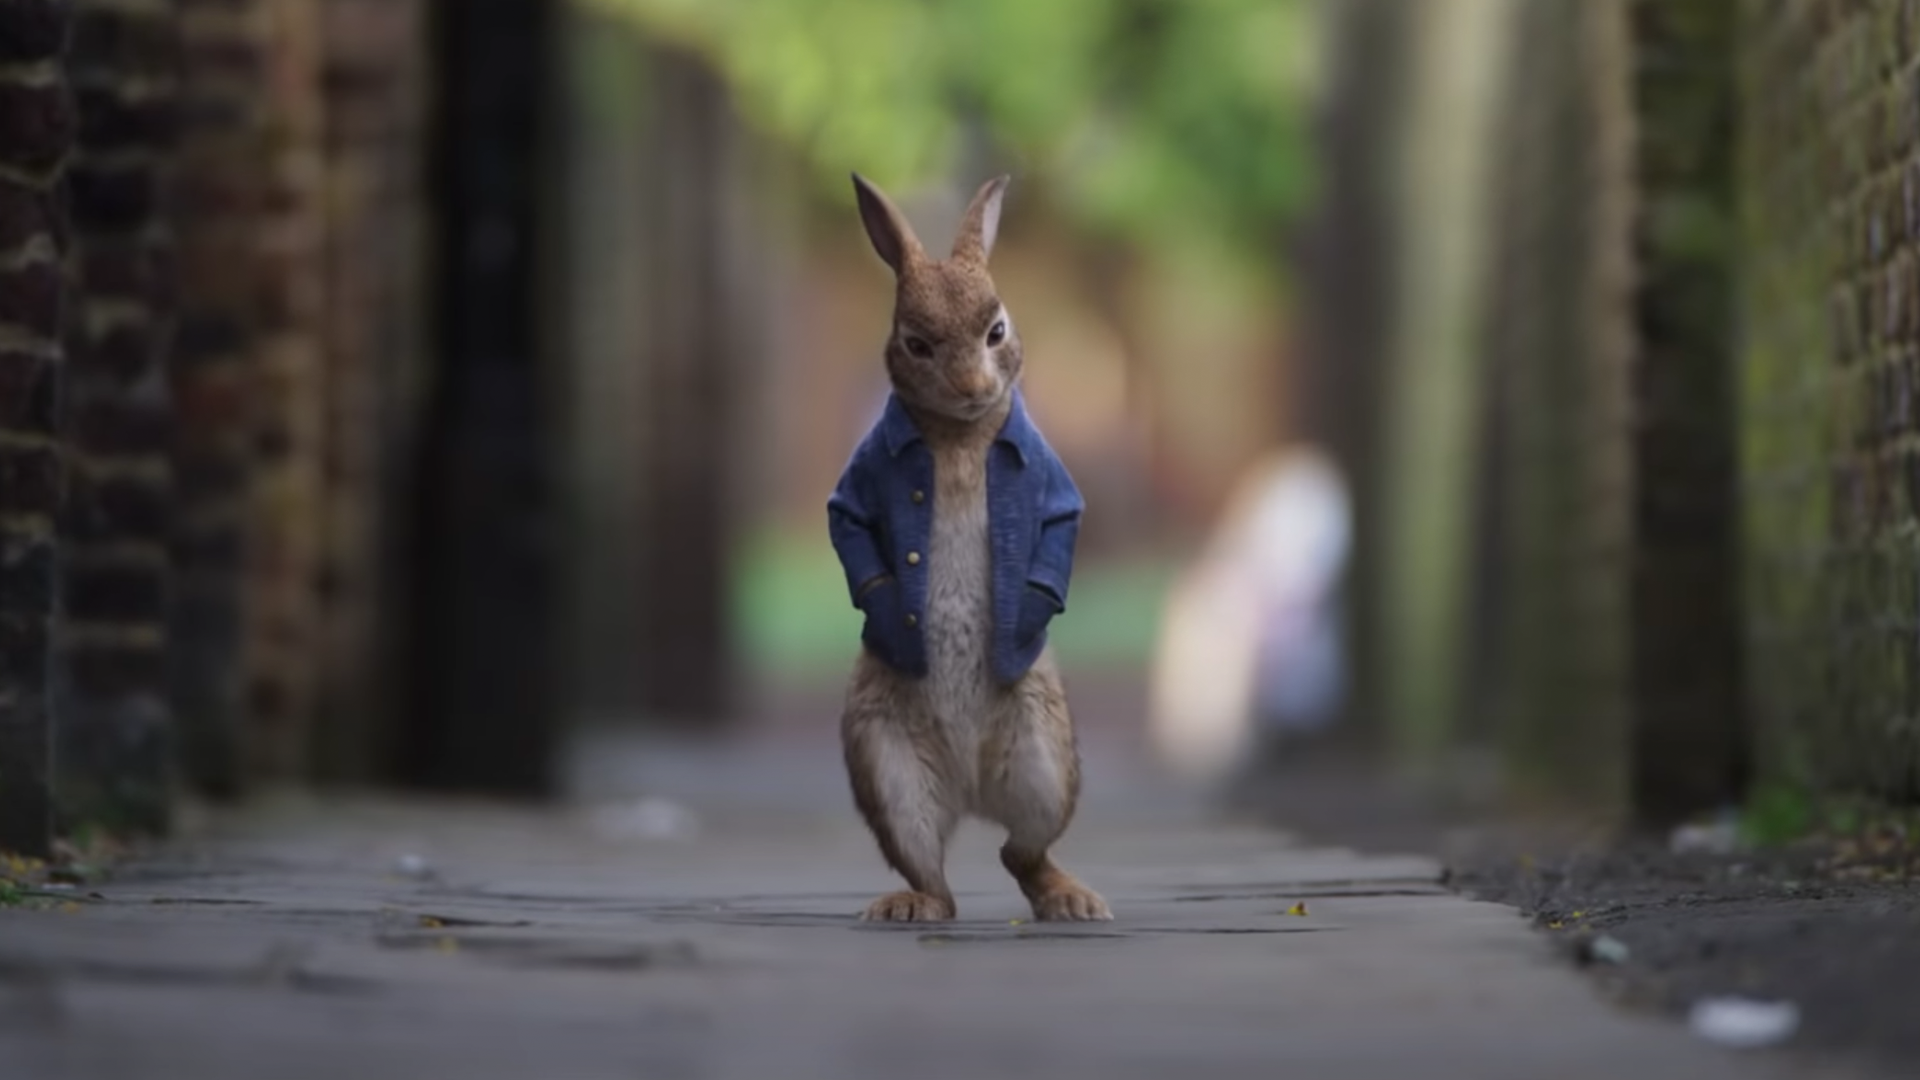 Peter Rabbit walking down the street